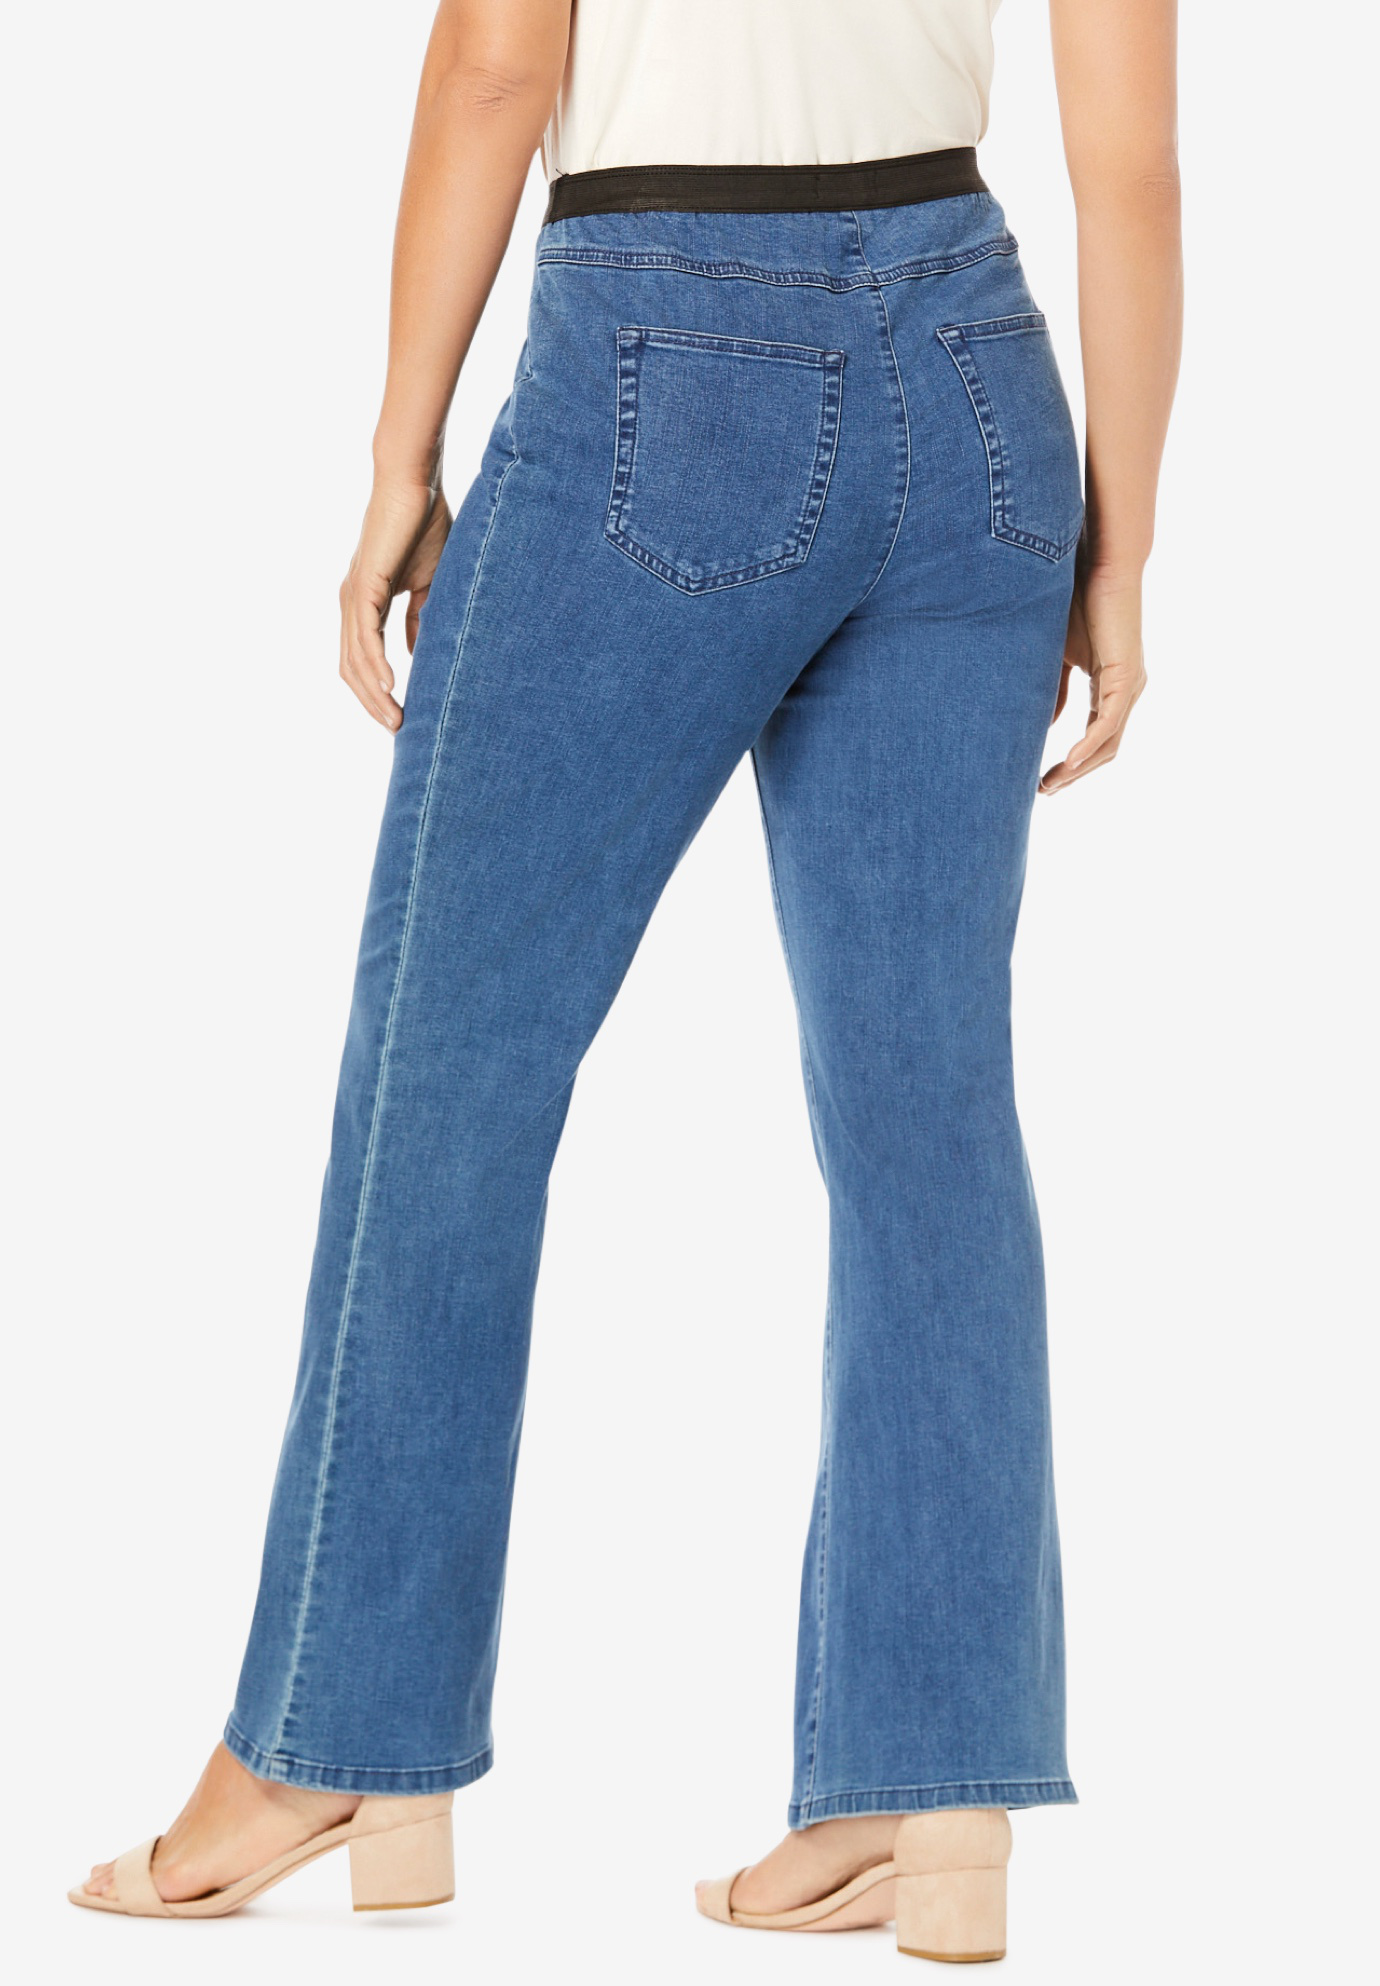 Jessica London Women's Plus Size Bootcut Stretch Jeans Elastic Waist - 16, Indigo Blue - image 3 of 6